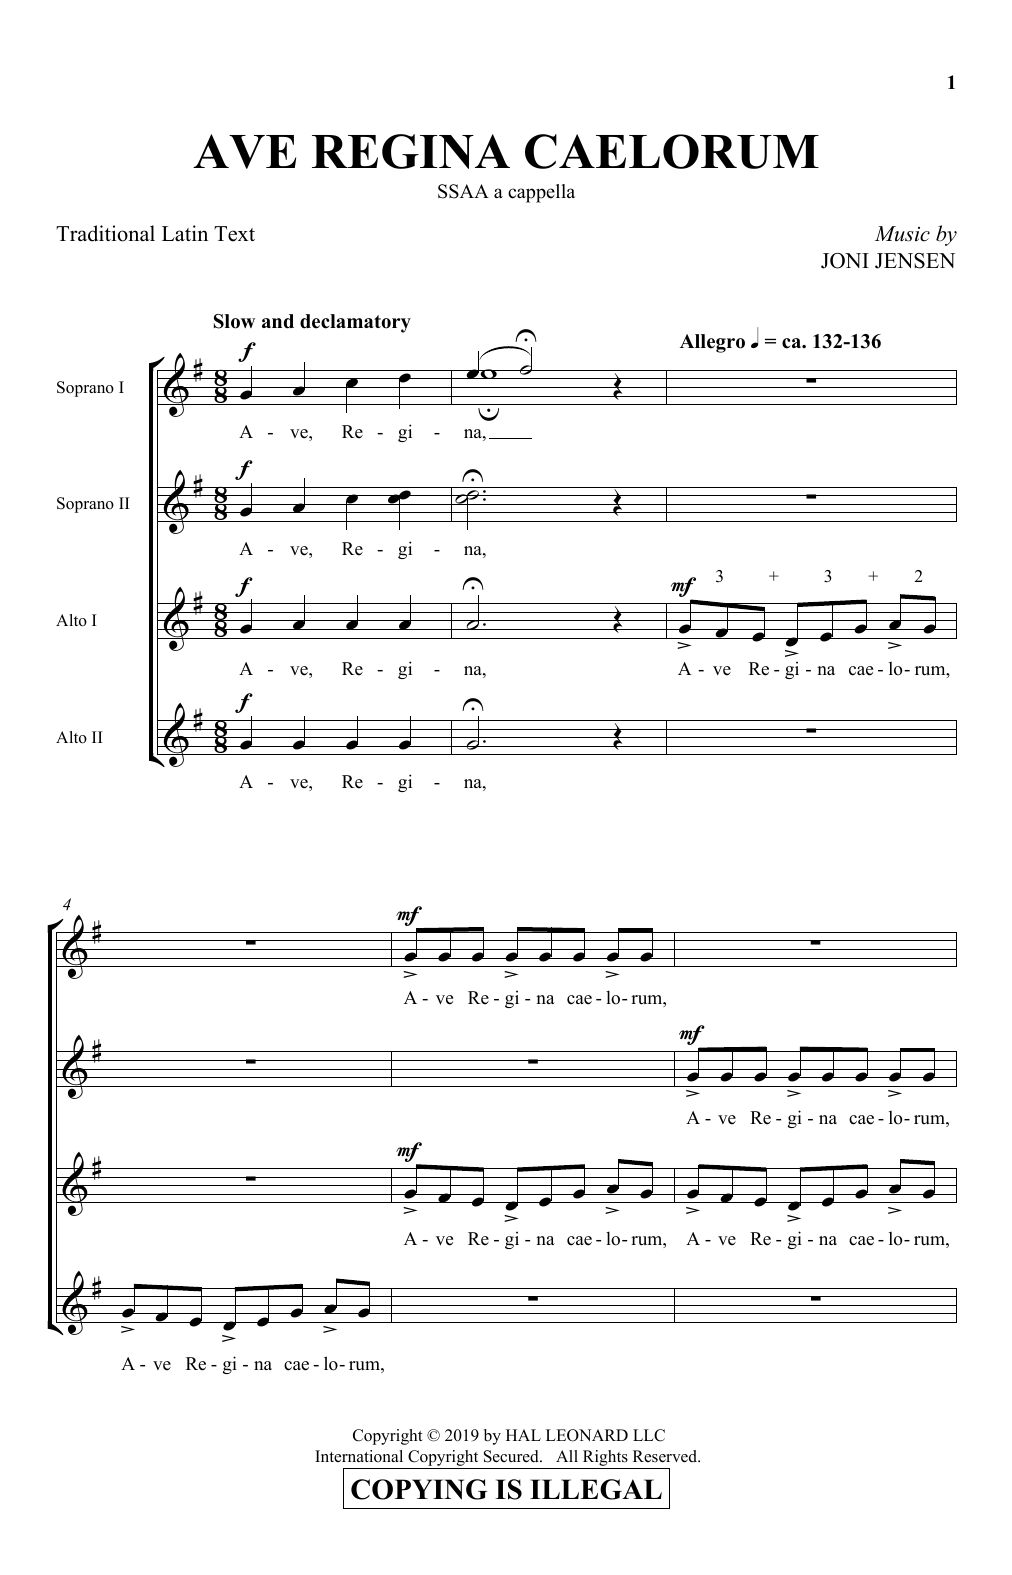 Download Joni Jensen Ave Regina Caelorum Sheet Music and learn how to play SSA Choir PDF digital score in minutes